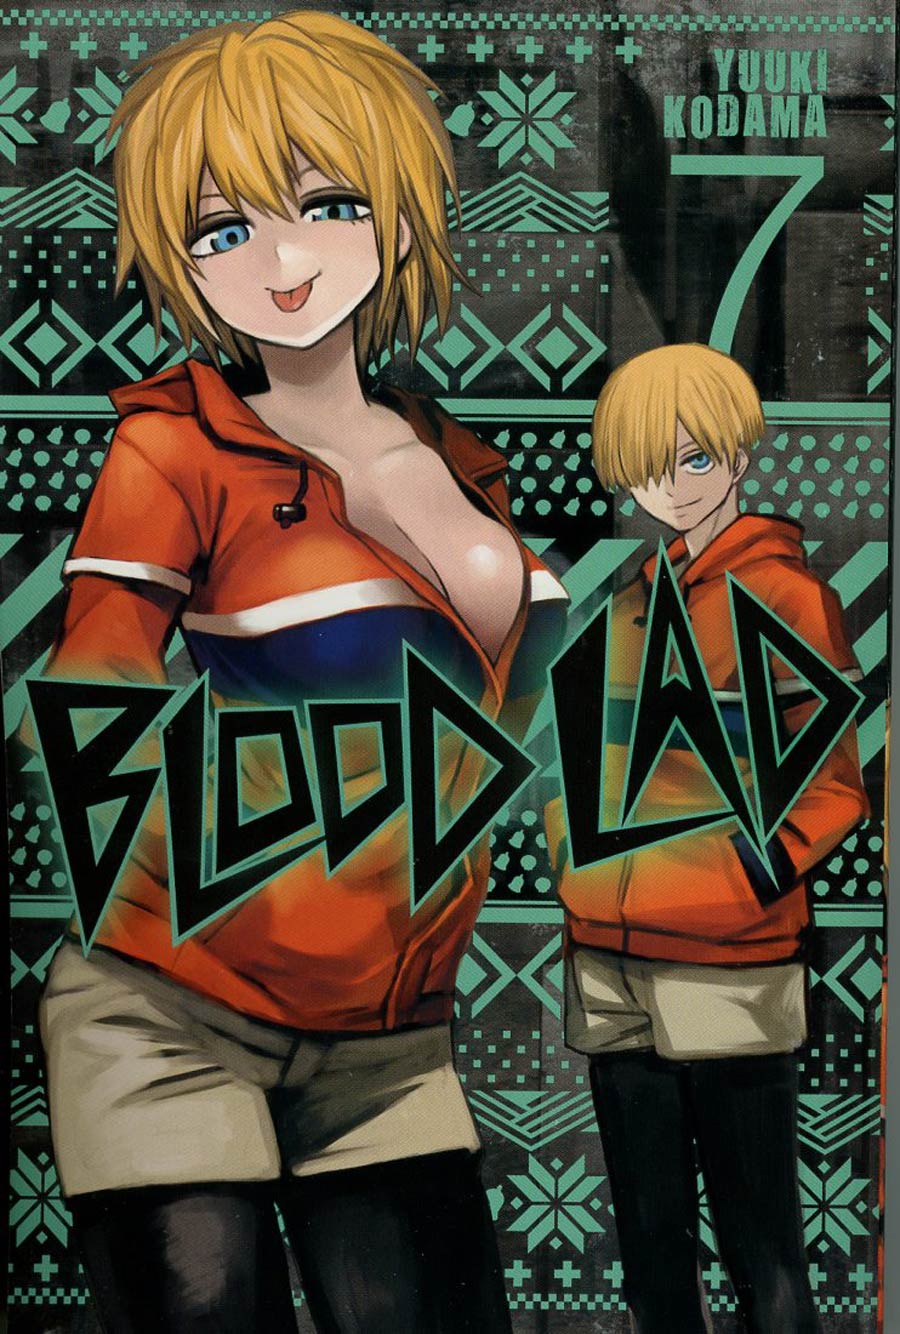 Blood Lad Vol 7 TP